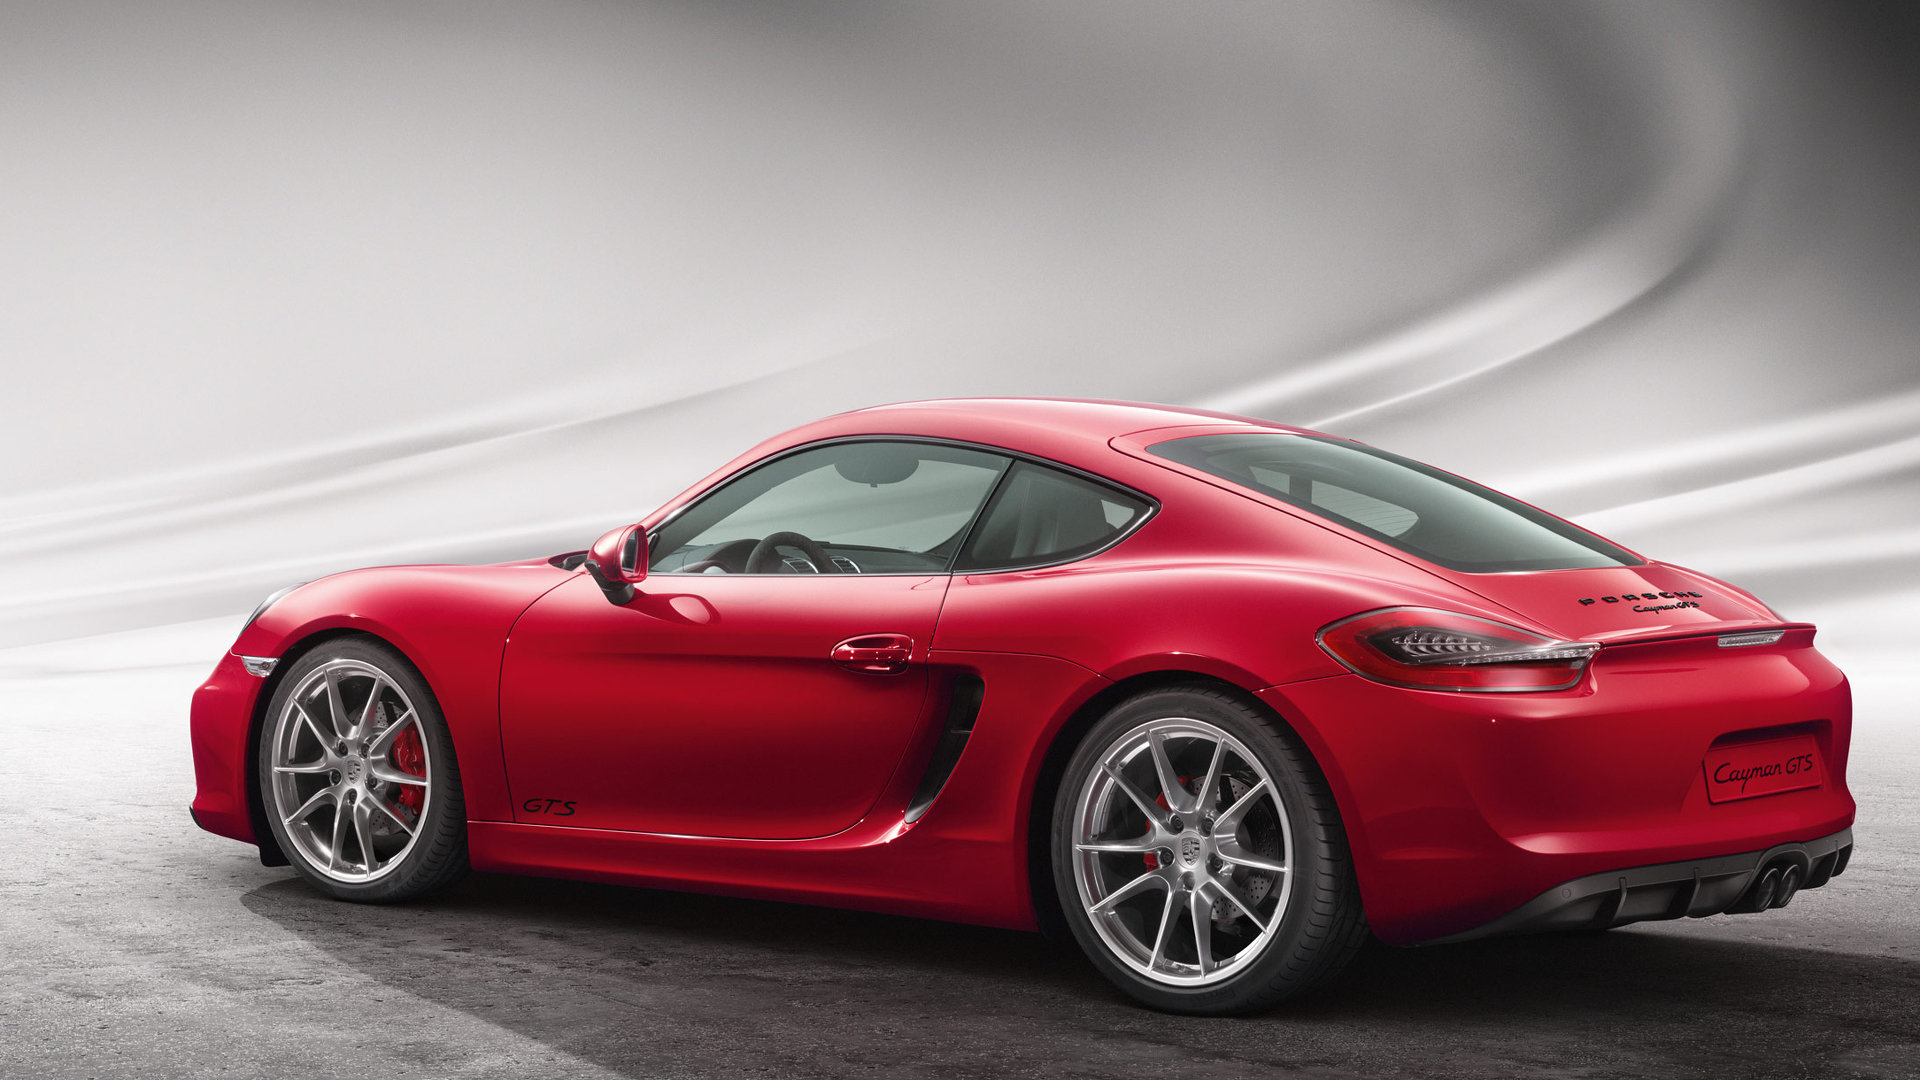 Free download Porsche Cayman GTS background ID:380151 1080p for desktop